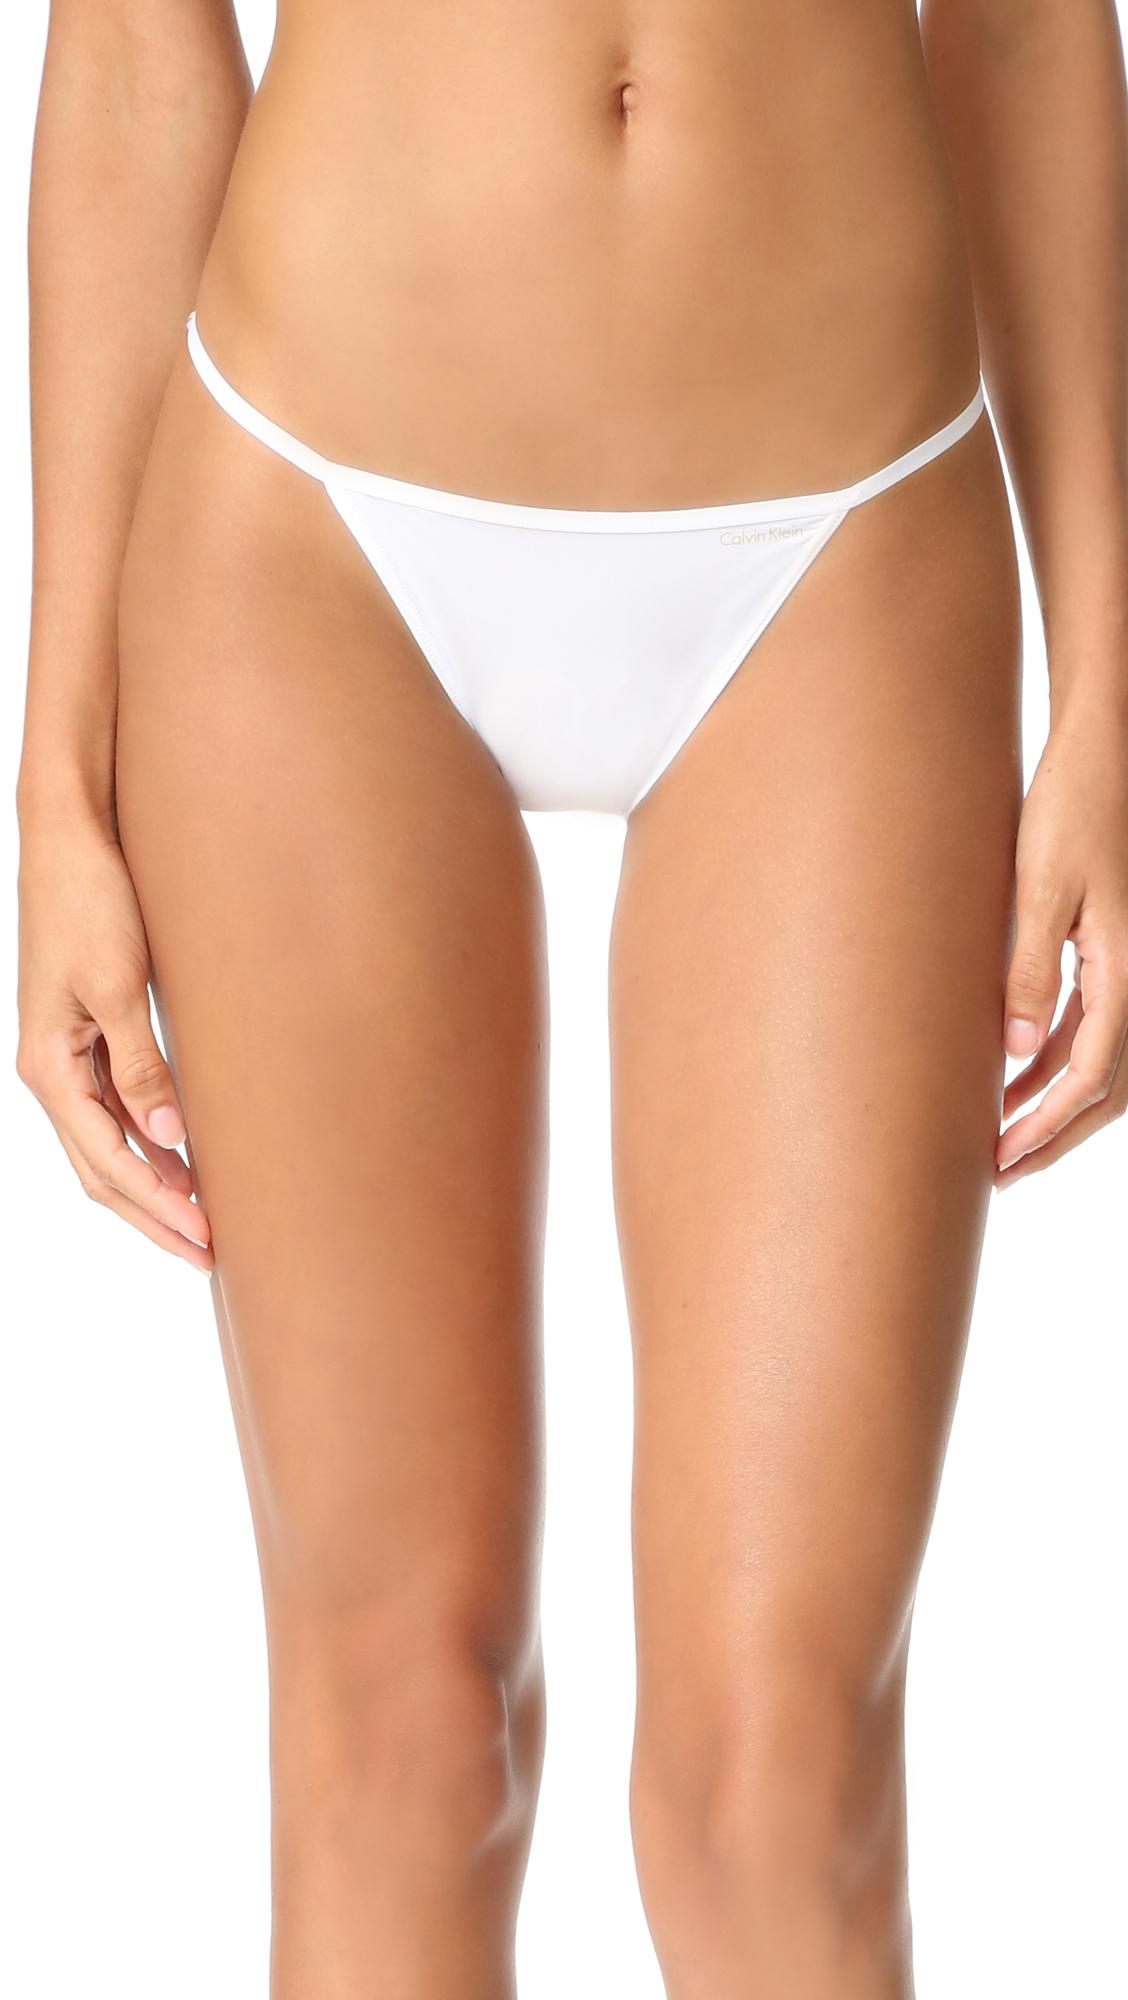 https://cdna.lystit.com/photos/shopbop/8c0ce9b2/calvin-klein-White-Sleek-String-Bikini-Panties.jpeg